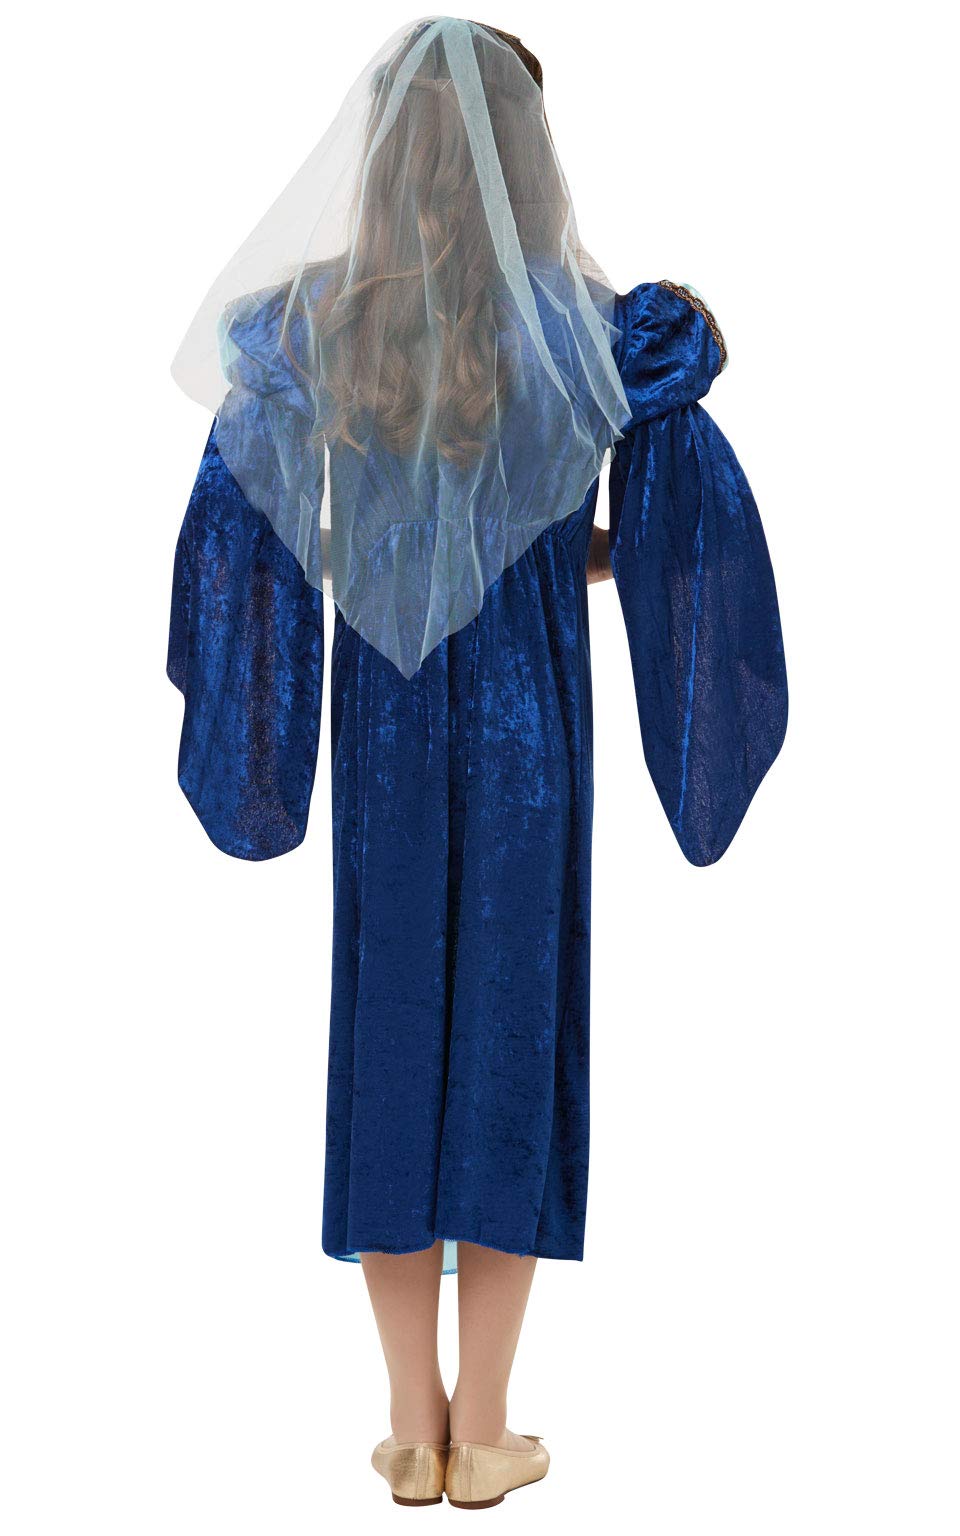 Rubie's Girl's Renaissance Faire Juliet Costume, Medium